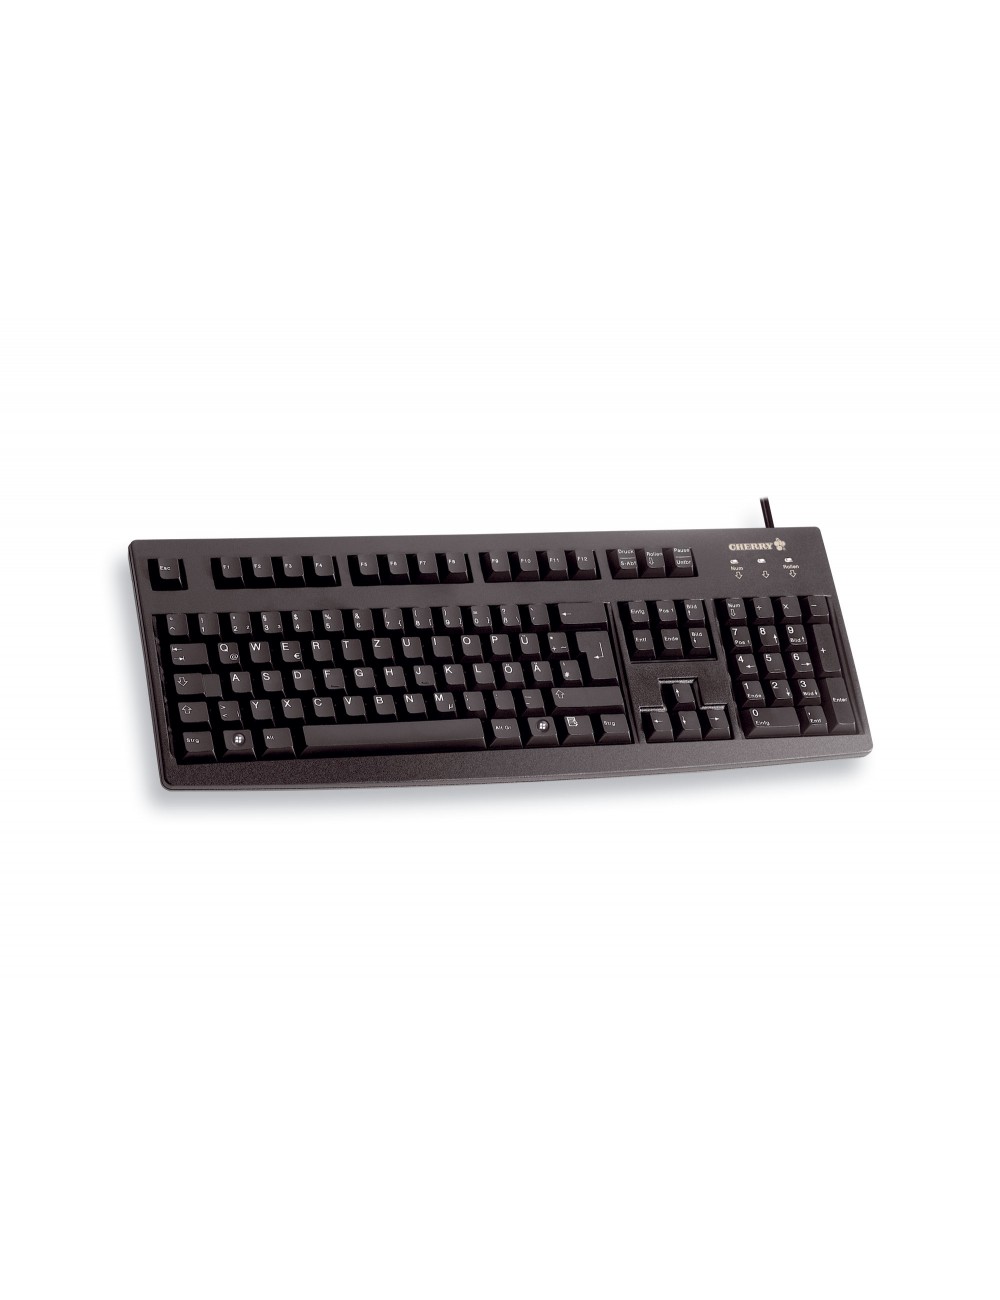 keyboard-cherry-classic-line-g83-6105lunde-2-1.jpg